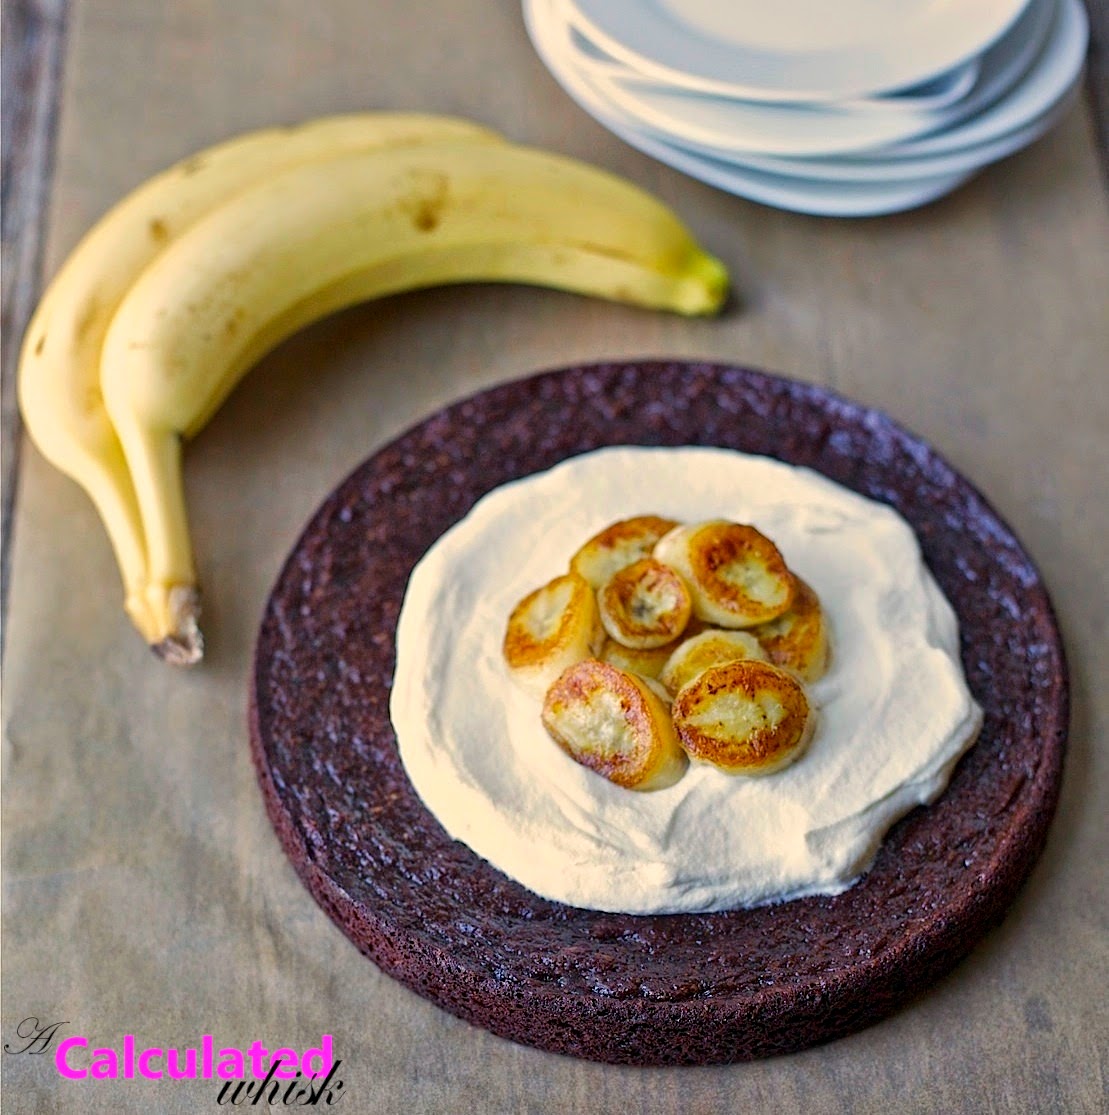 Fried Banana Brownie Cake with Honey Whipped Cream | acalculatedwhisk.com #primal #glutenfree #grainfree